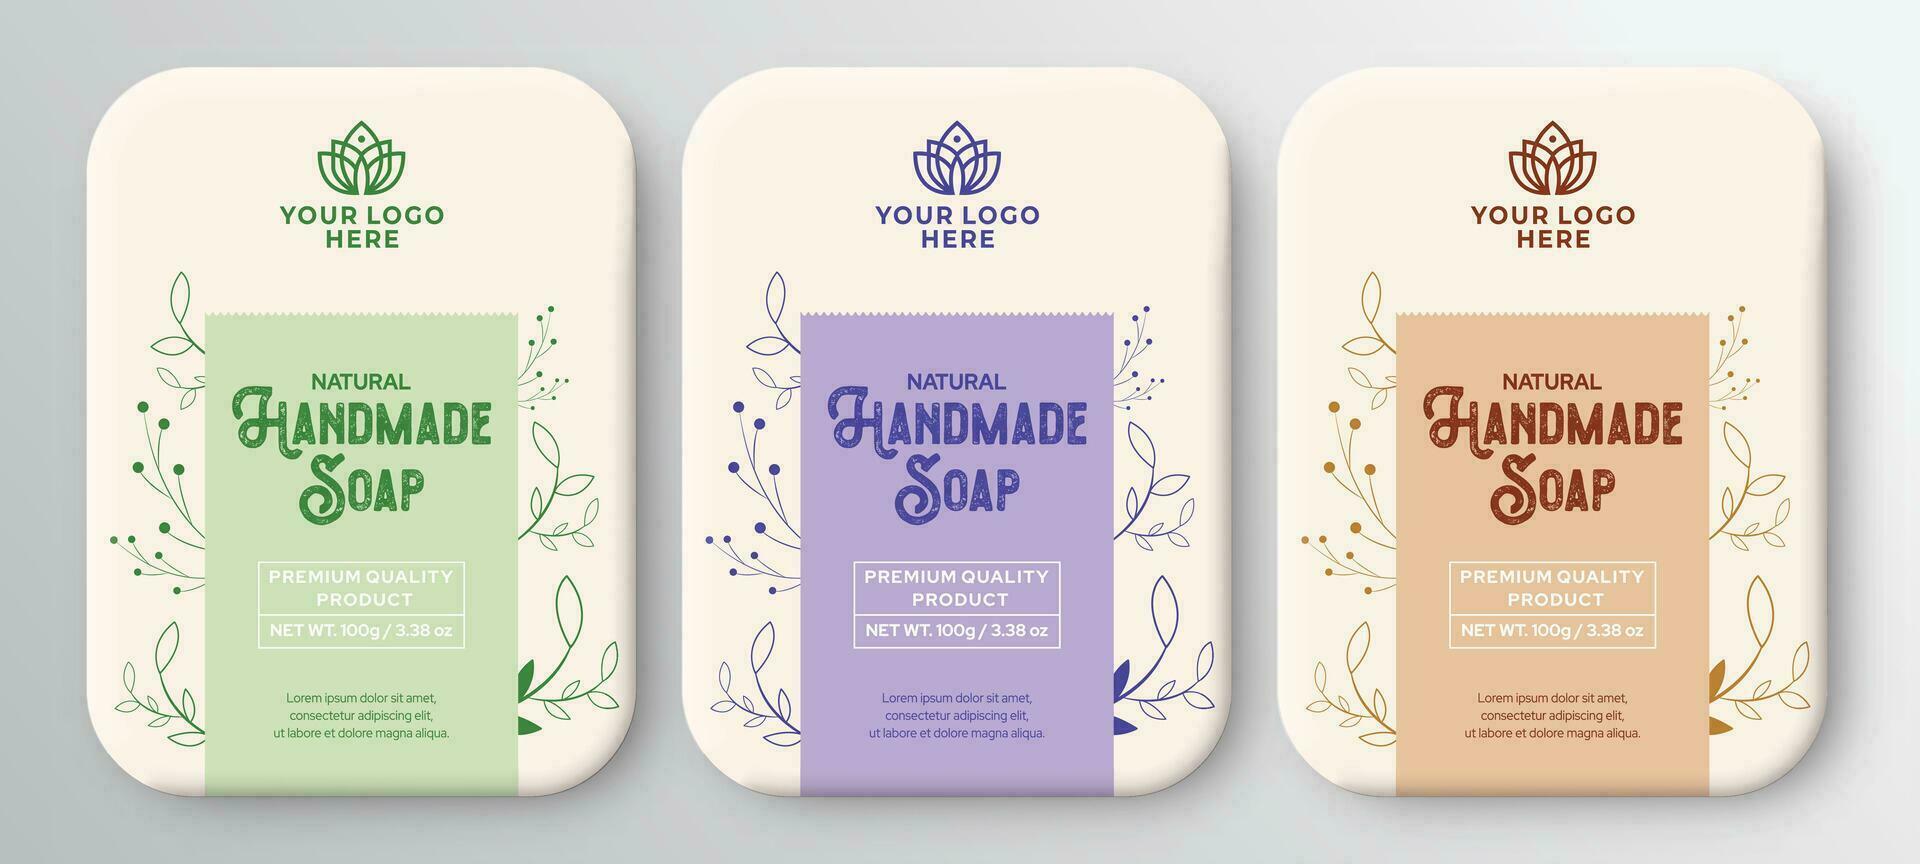 hecho a mano jabón etiqueta diseño mano dibujado etiquetas y patrones para hecho a mano jabón barras, natural jabón etiquetas vector ilustración